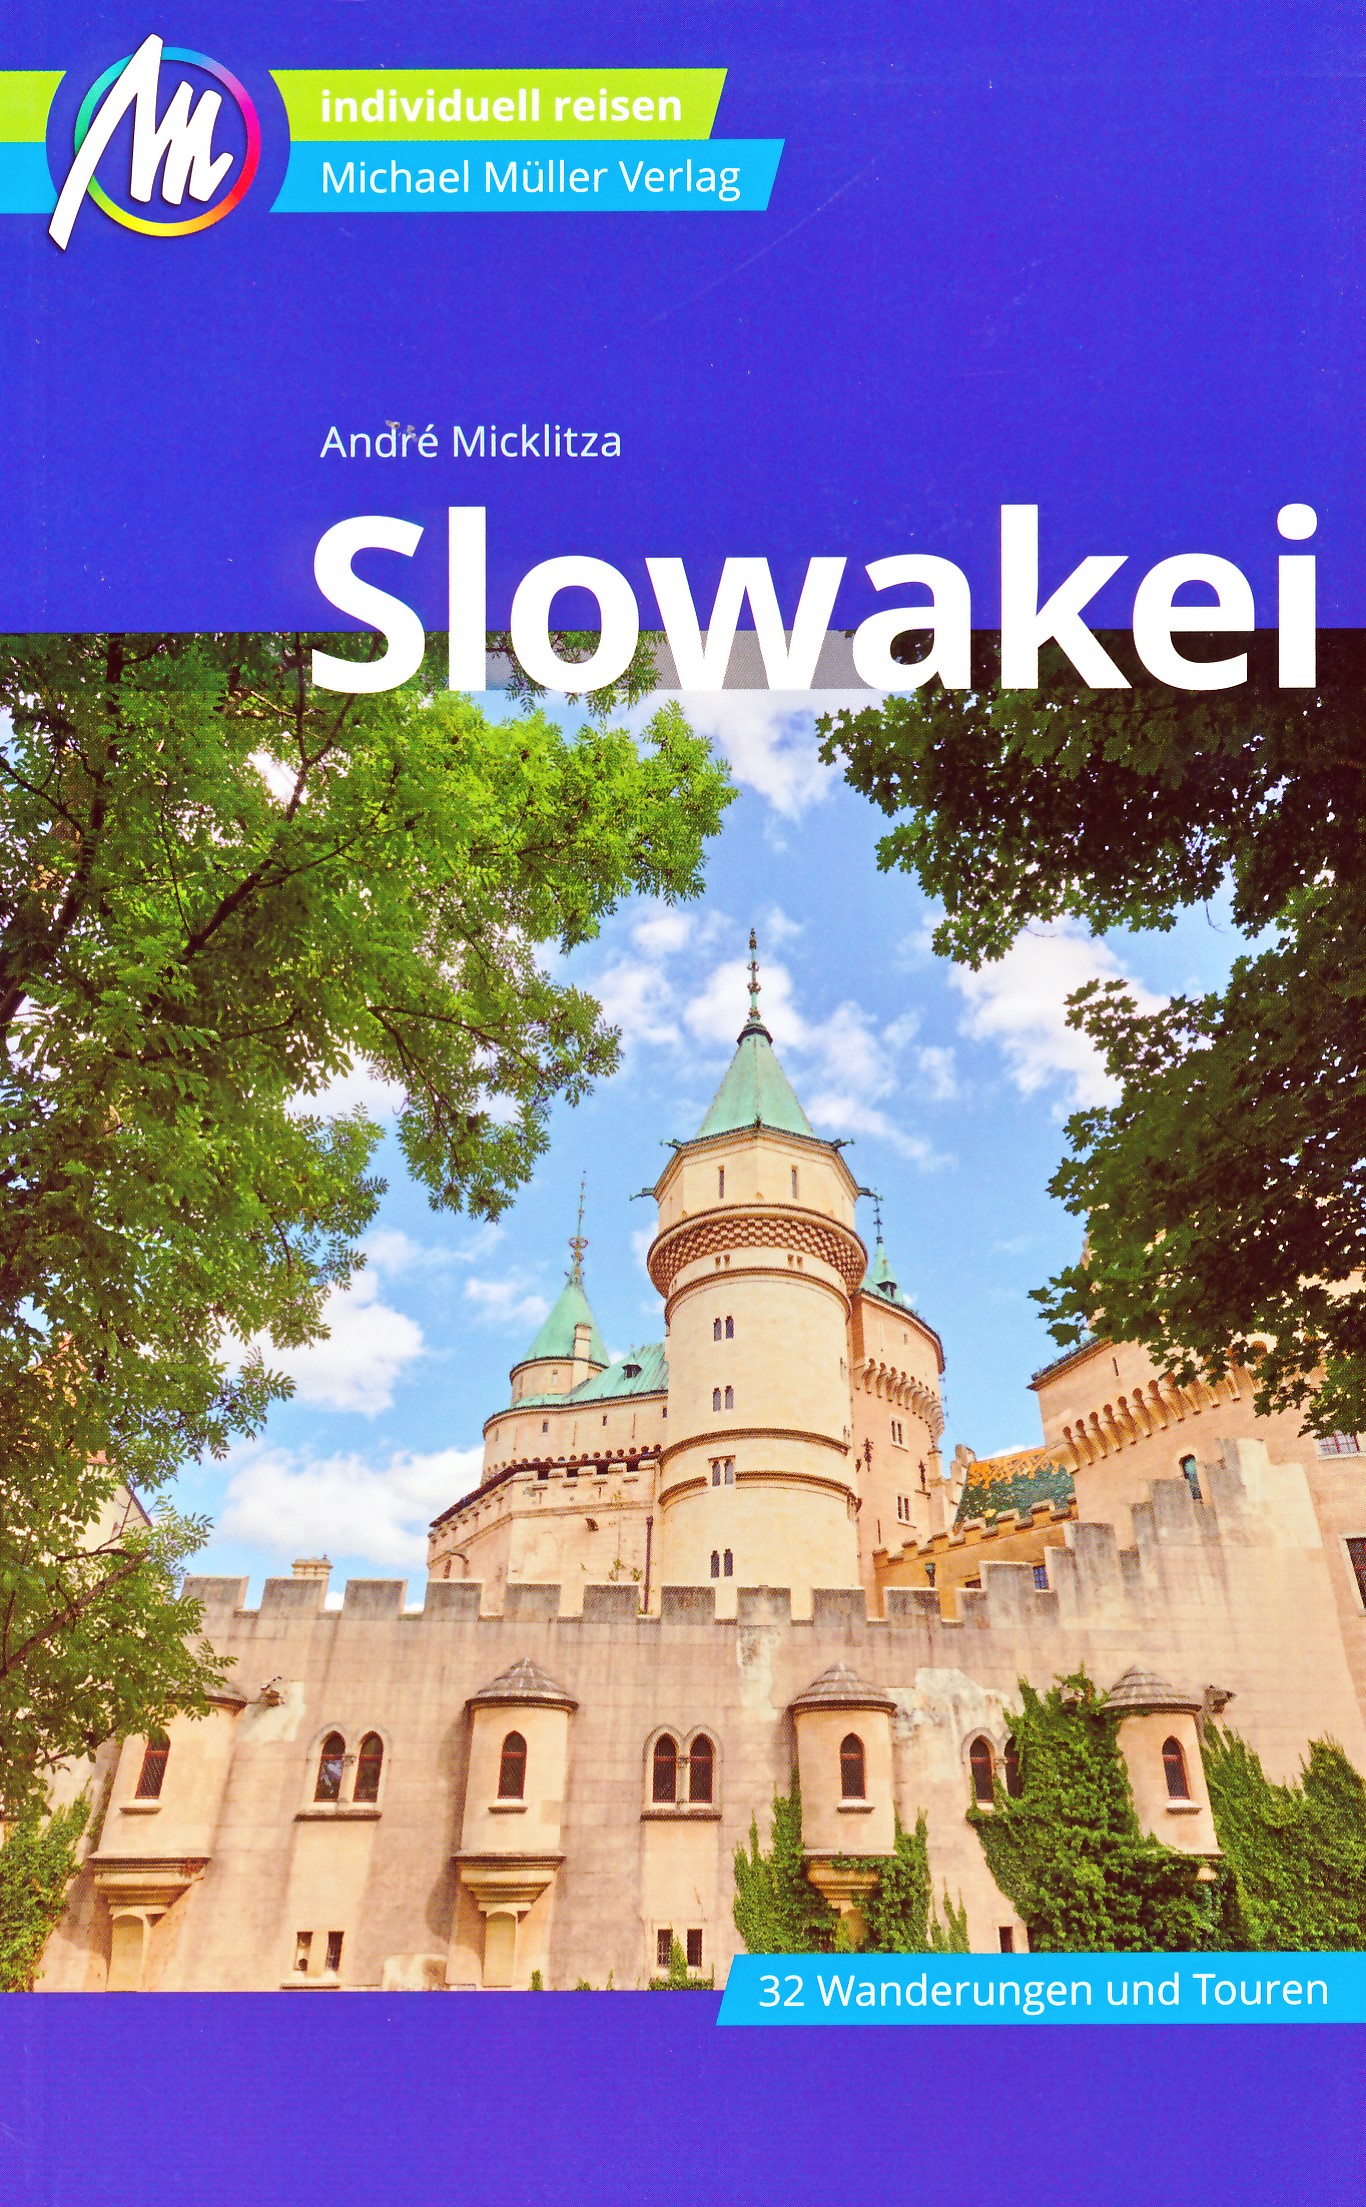 Online bestellen: Reisgids Slowakei - Slowakije | Michael Müller Verlag